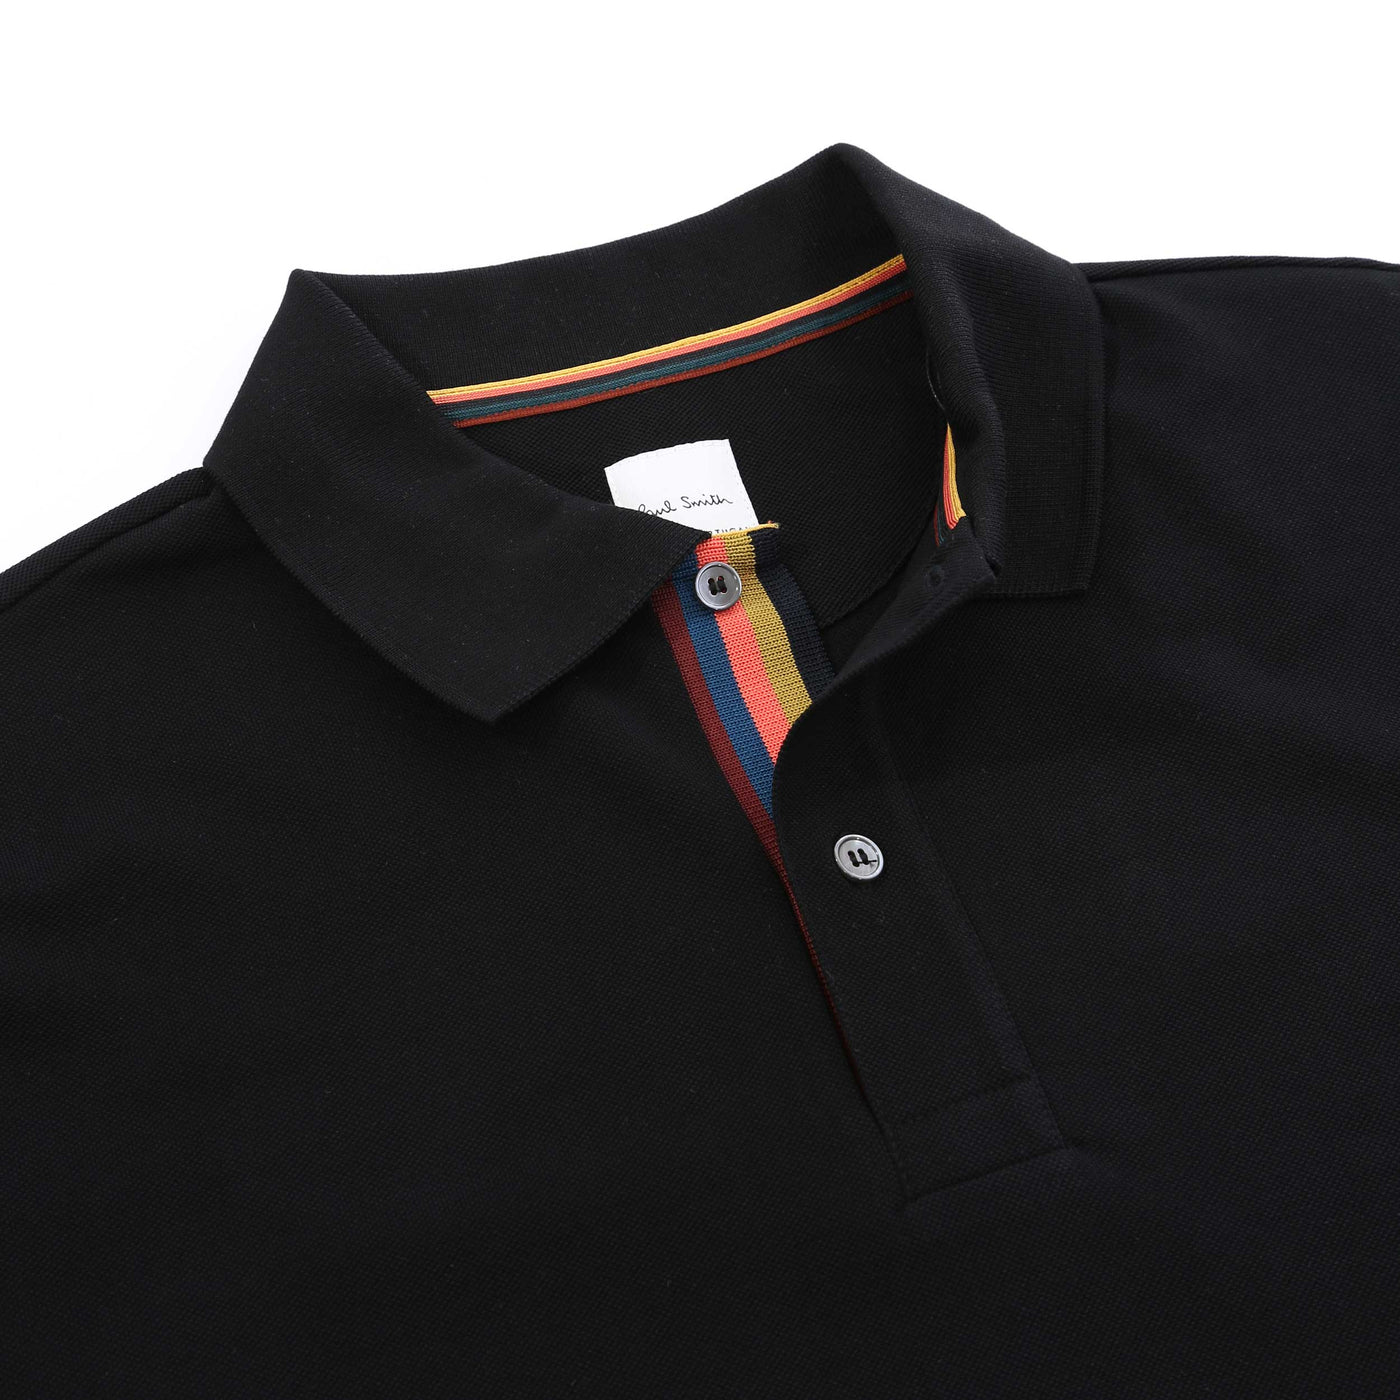 Paul Smith Placket Polo Shirt in Black Collar